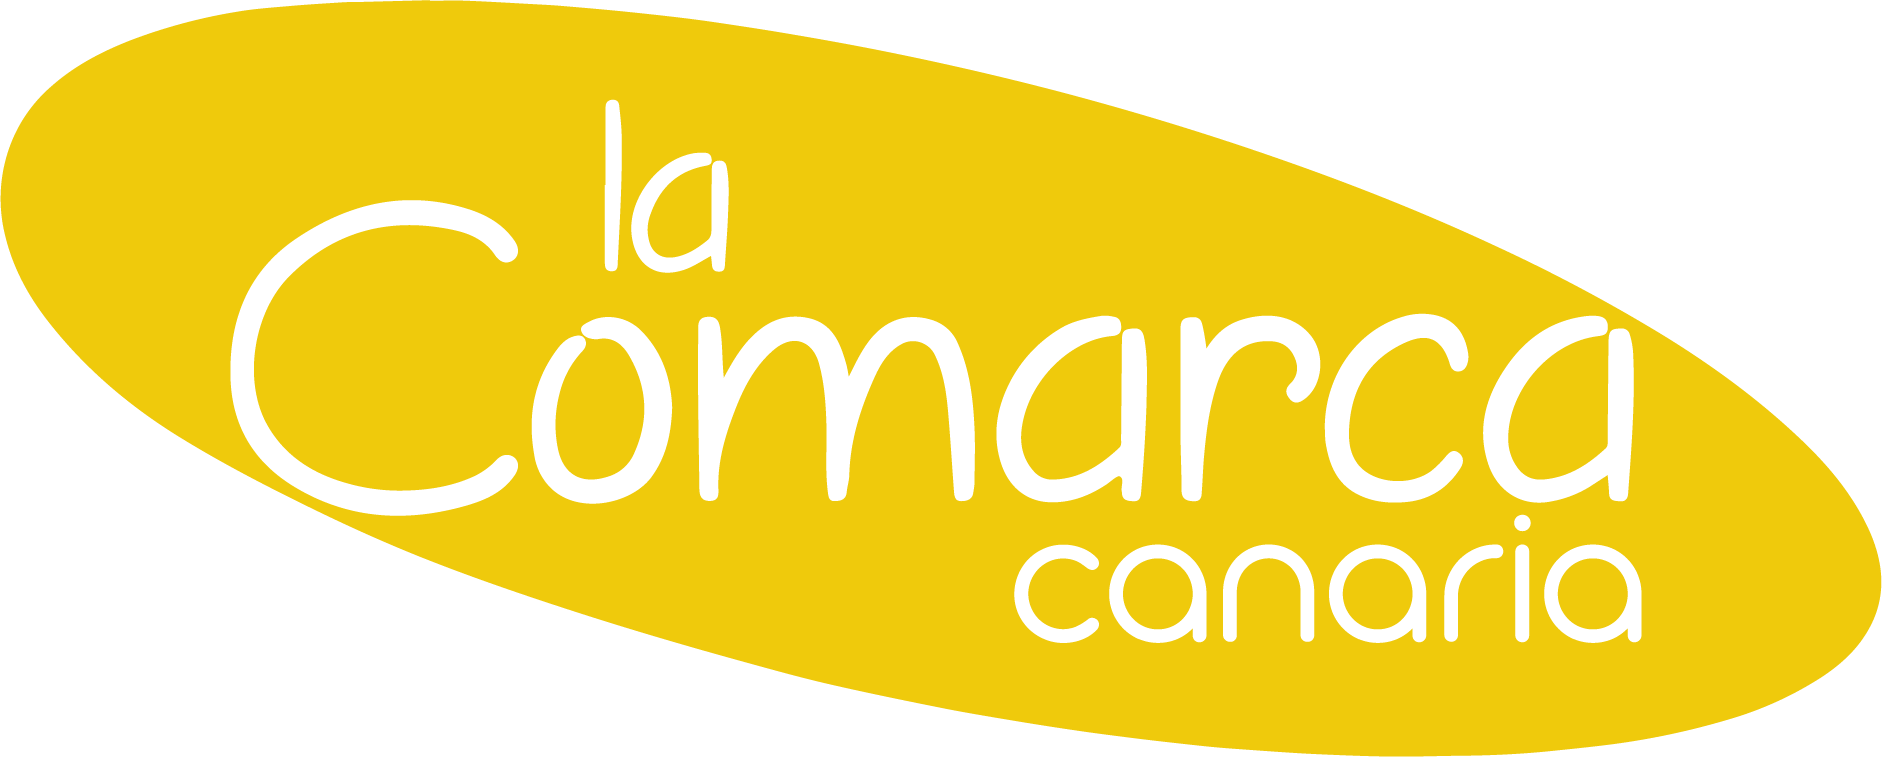 La Comarca Canaria